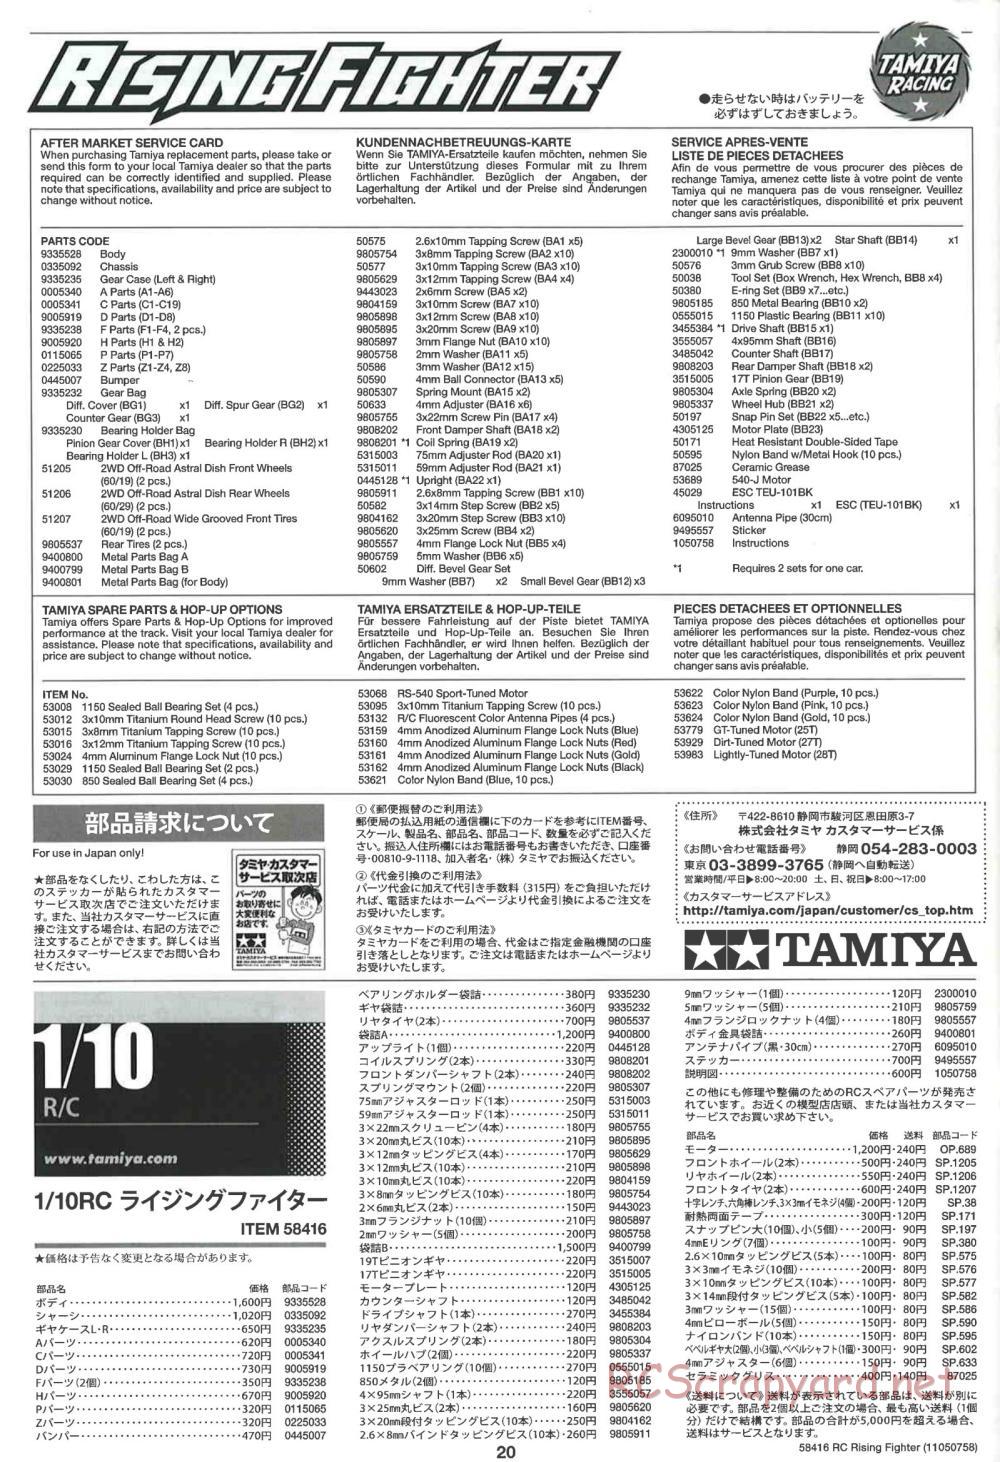 Tamiya - Rising Fighter Chassis - Manual - Page 20